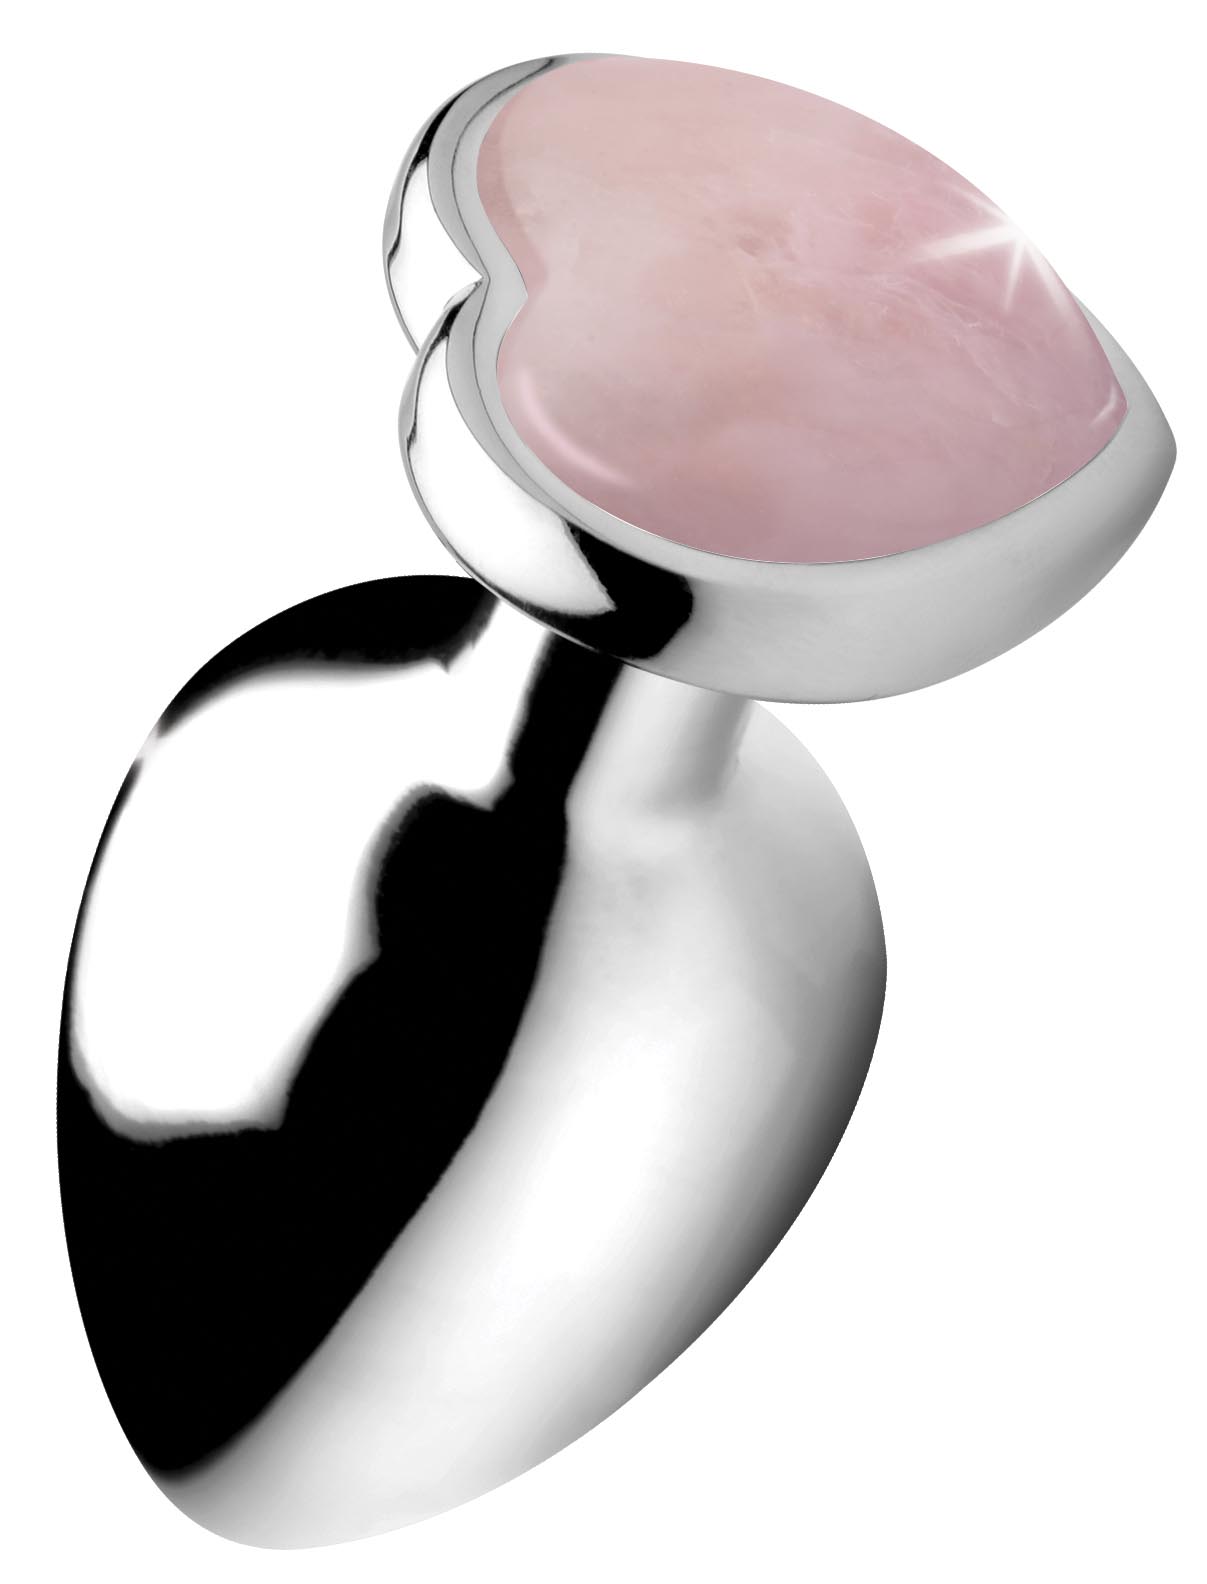 Authentic Rose Quartz Gemstone Heart Anal Plug – Large